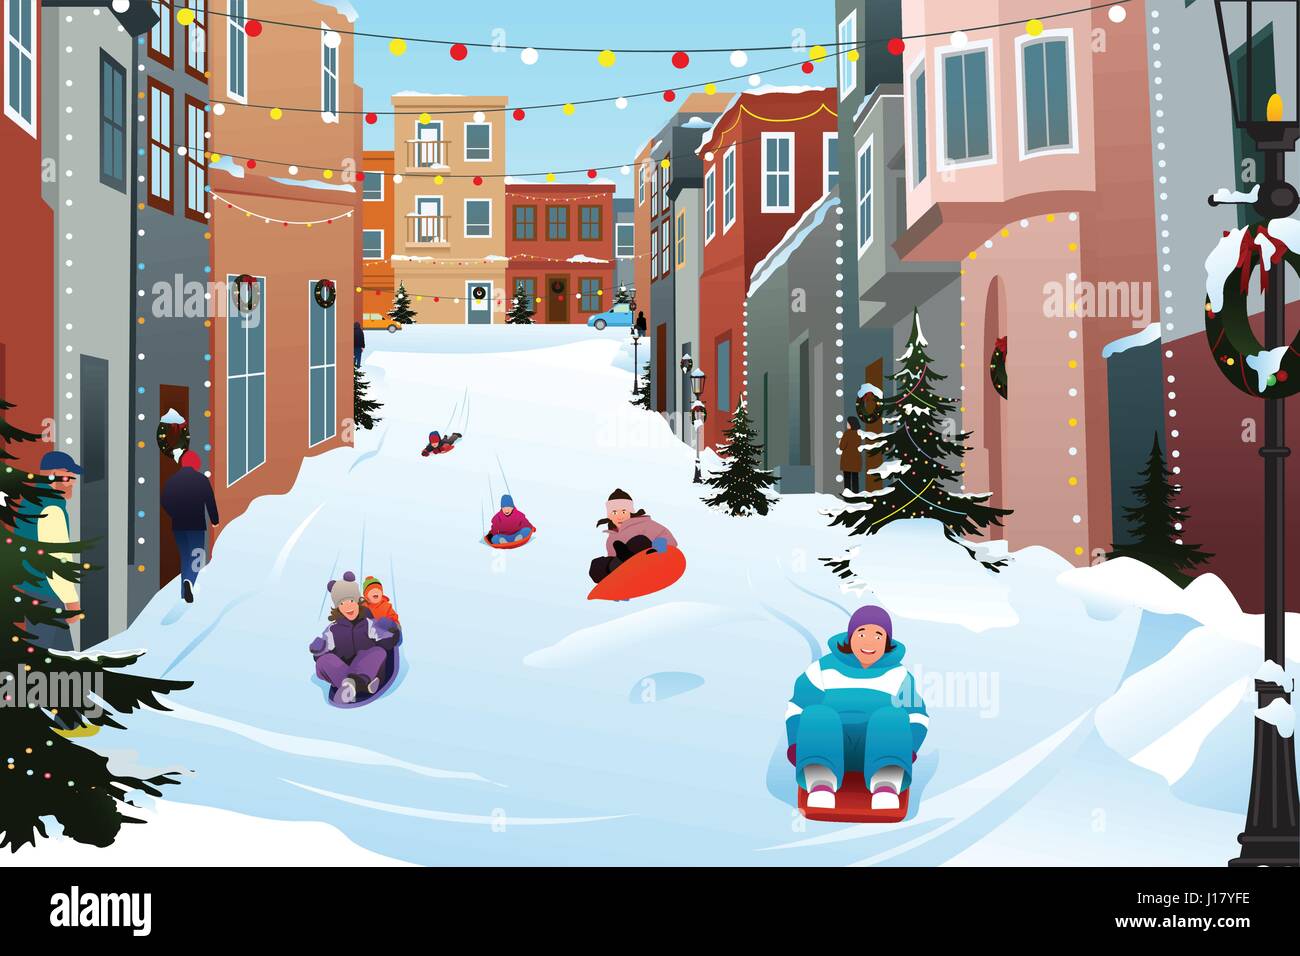 A vector illustration of Kids Sledding on a Snowy Street During Winter Season Stock Vector